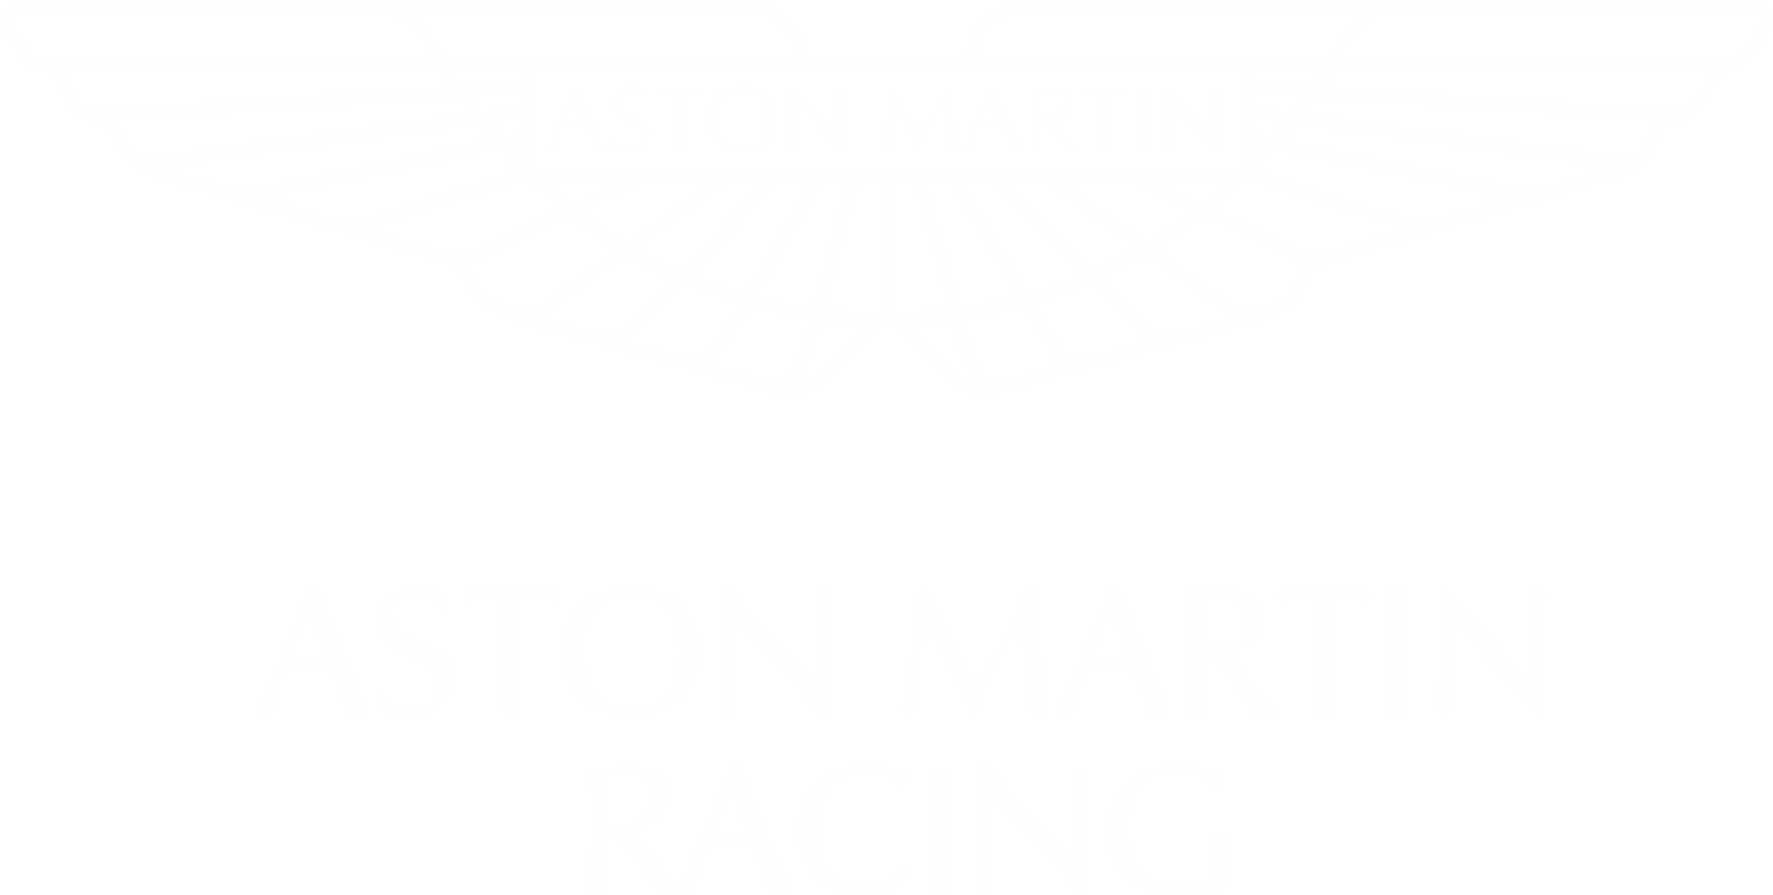 Aston Martin Logo Wallpapers